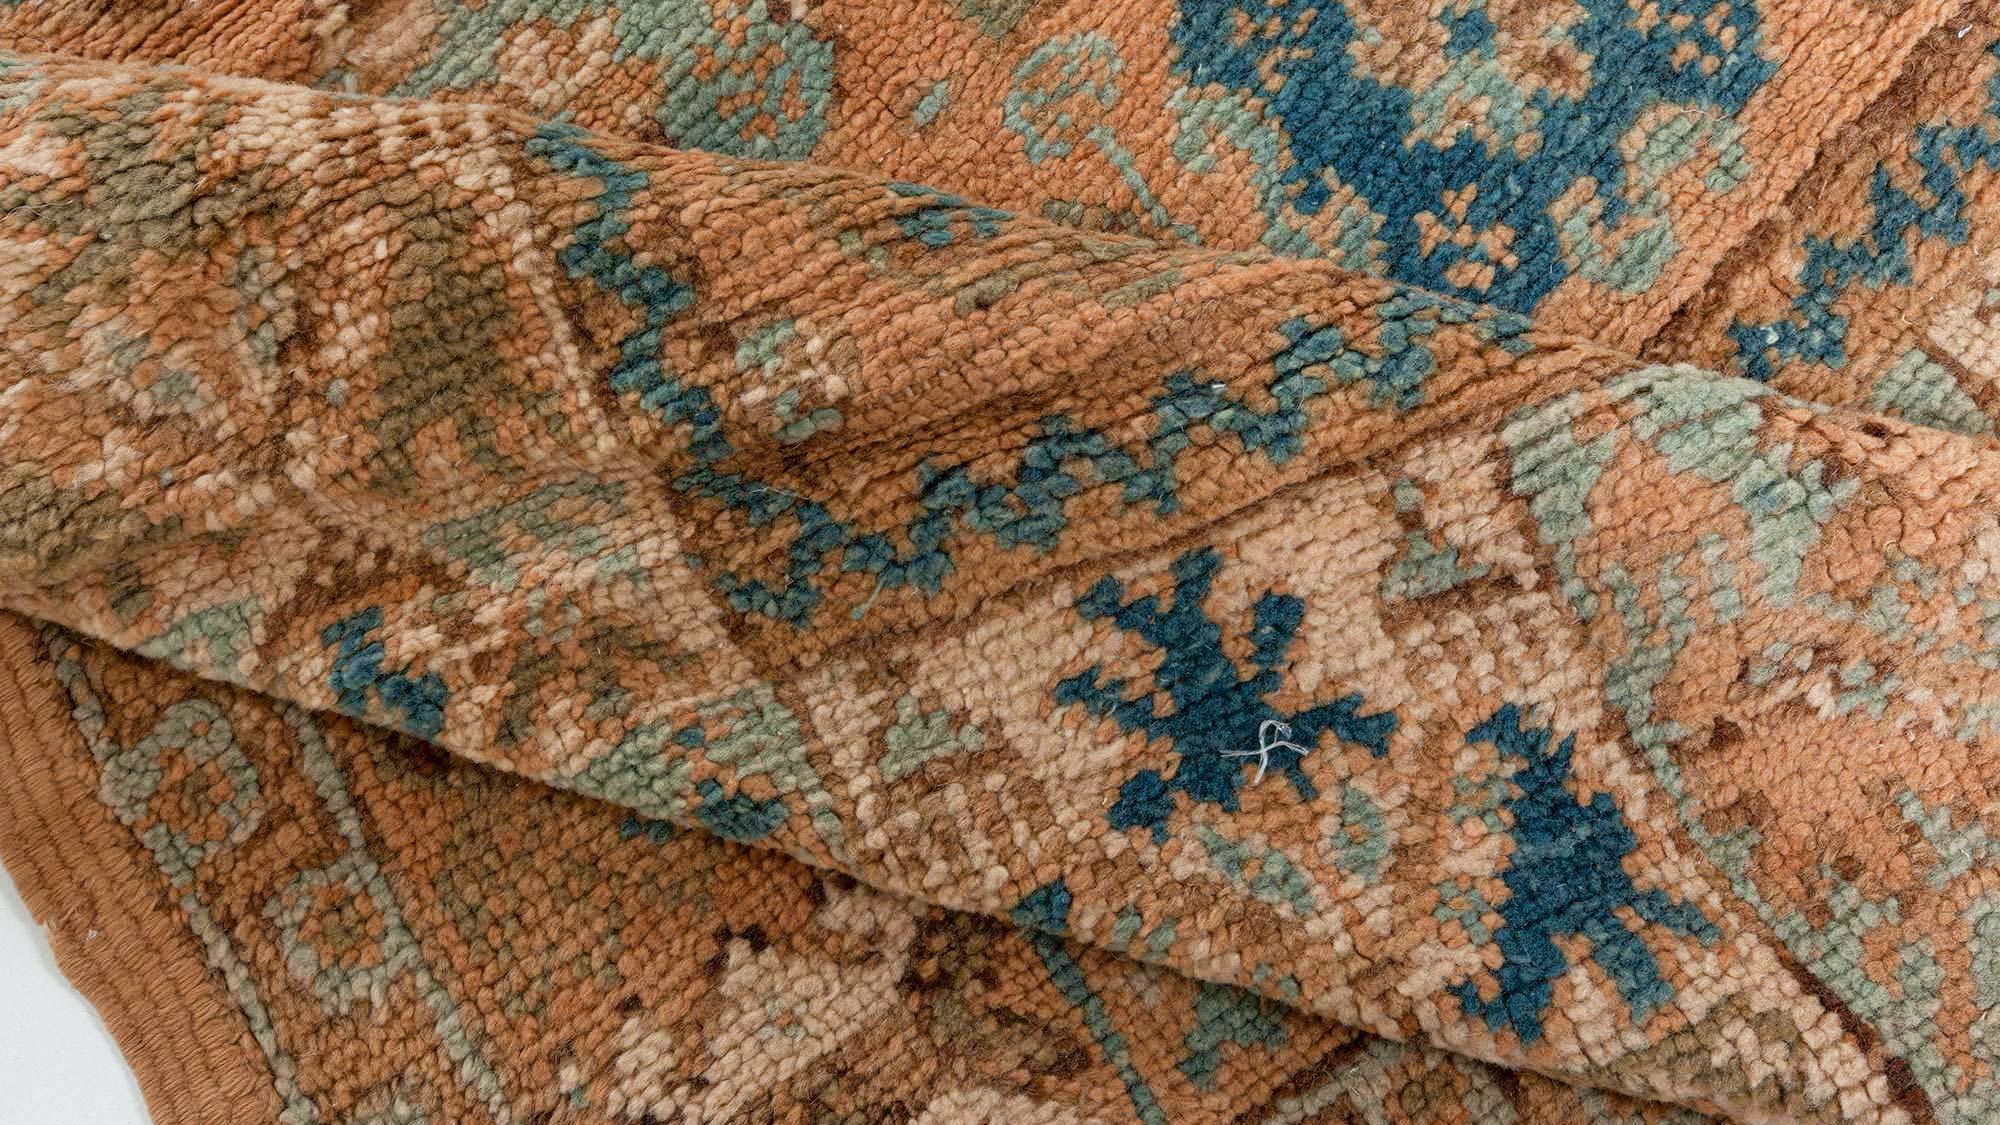 Vintage Moroccan orange and blue carpet
Size: 10'0